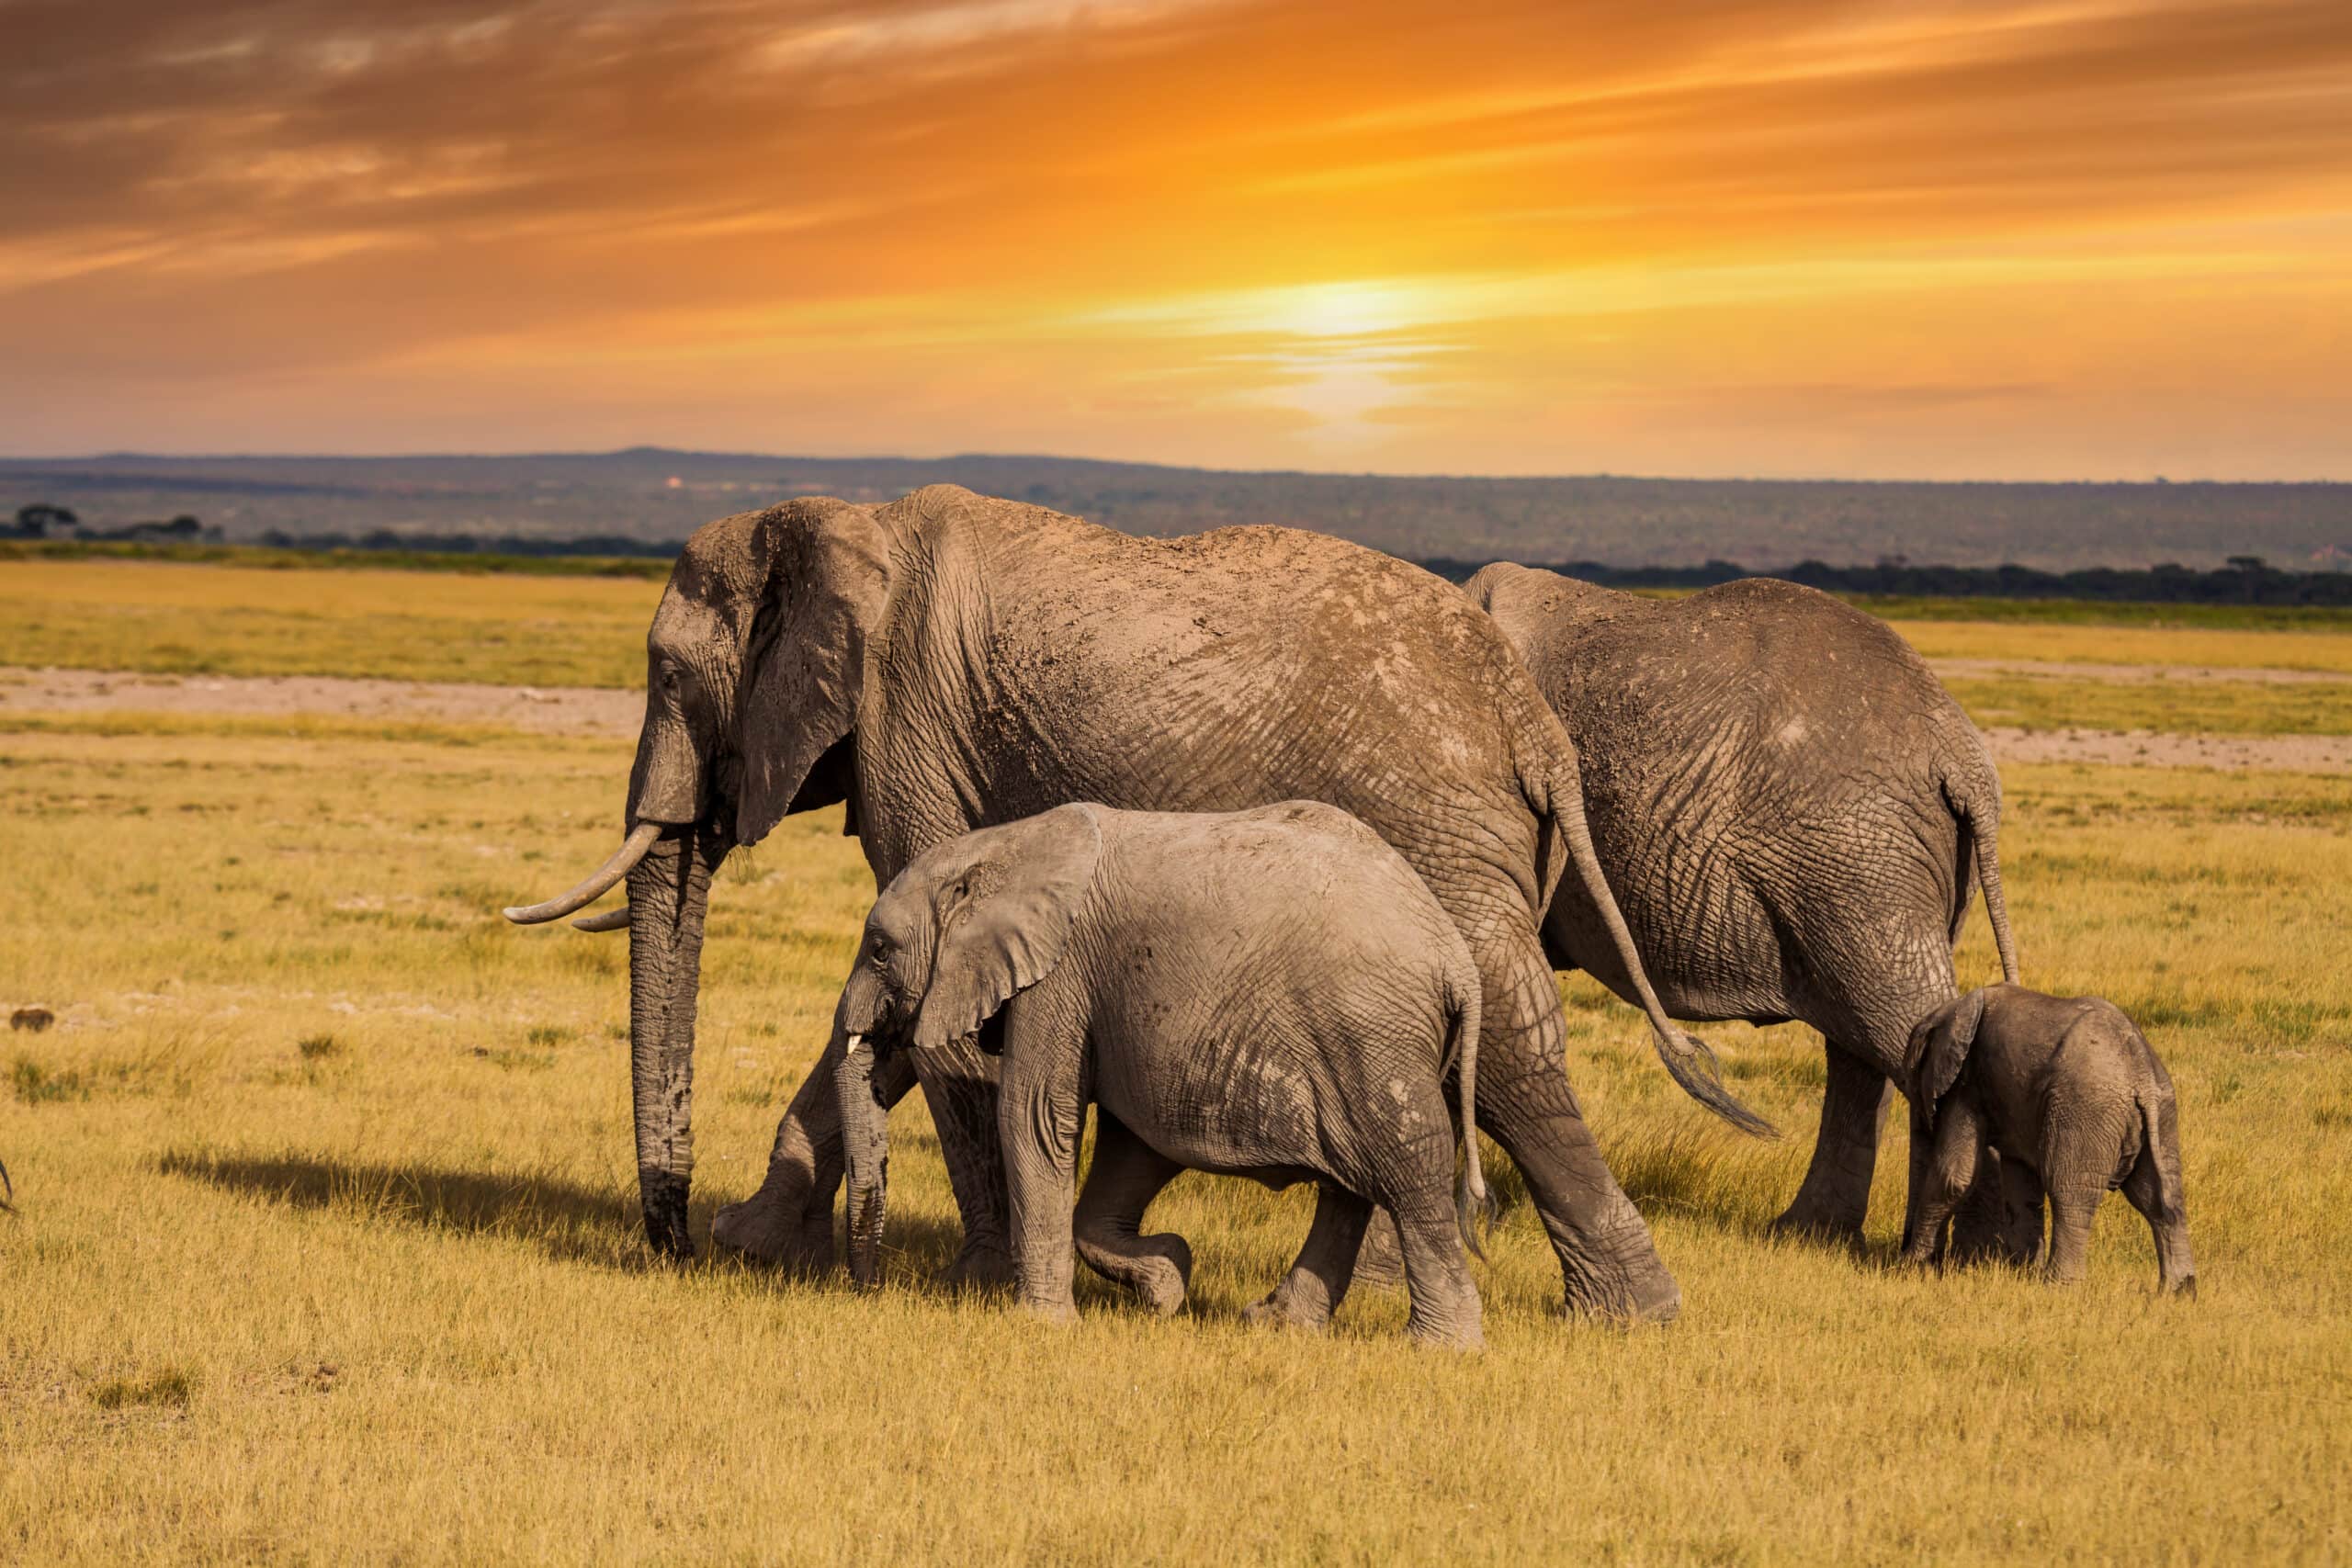 elephants with baby elephants kenya national park 2022 02 12 05 37 57 utc scaled